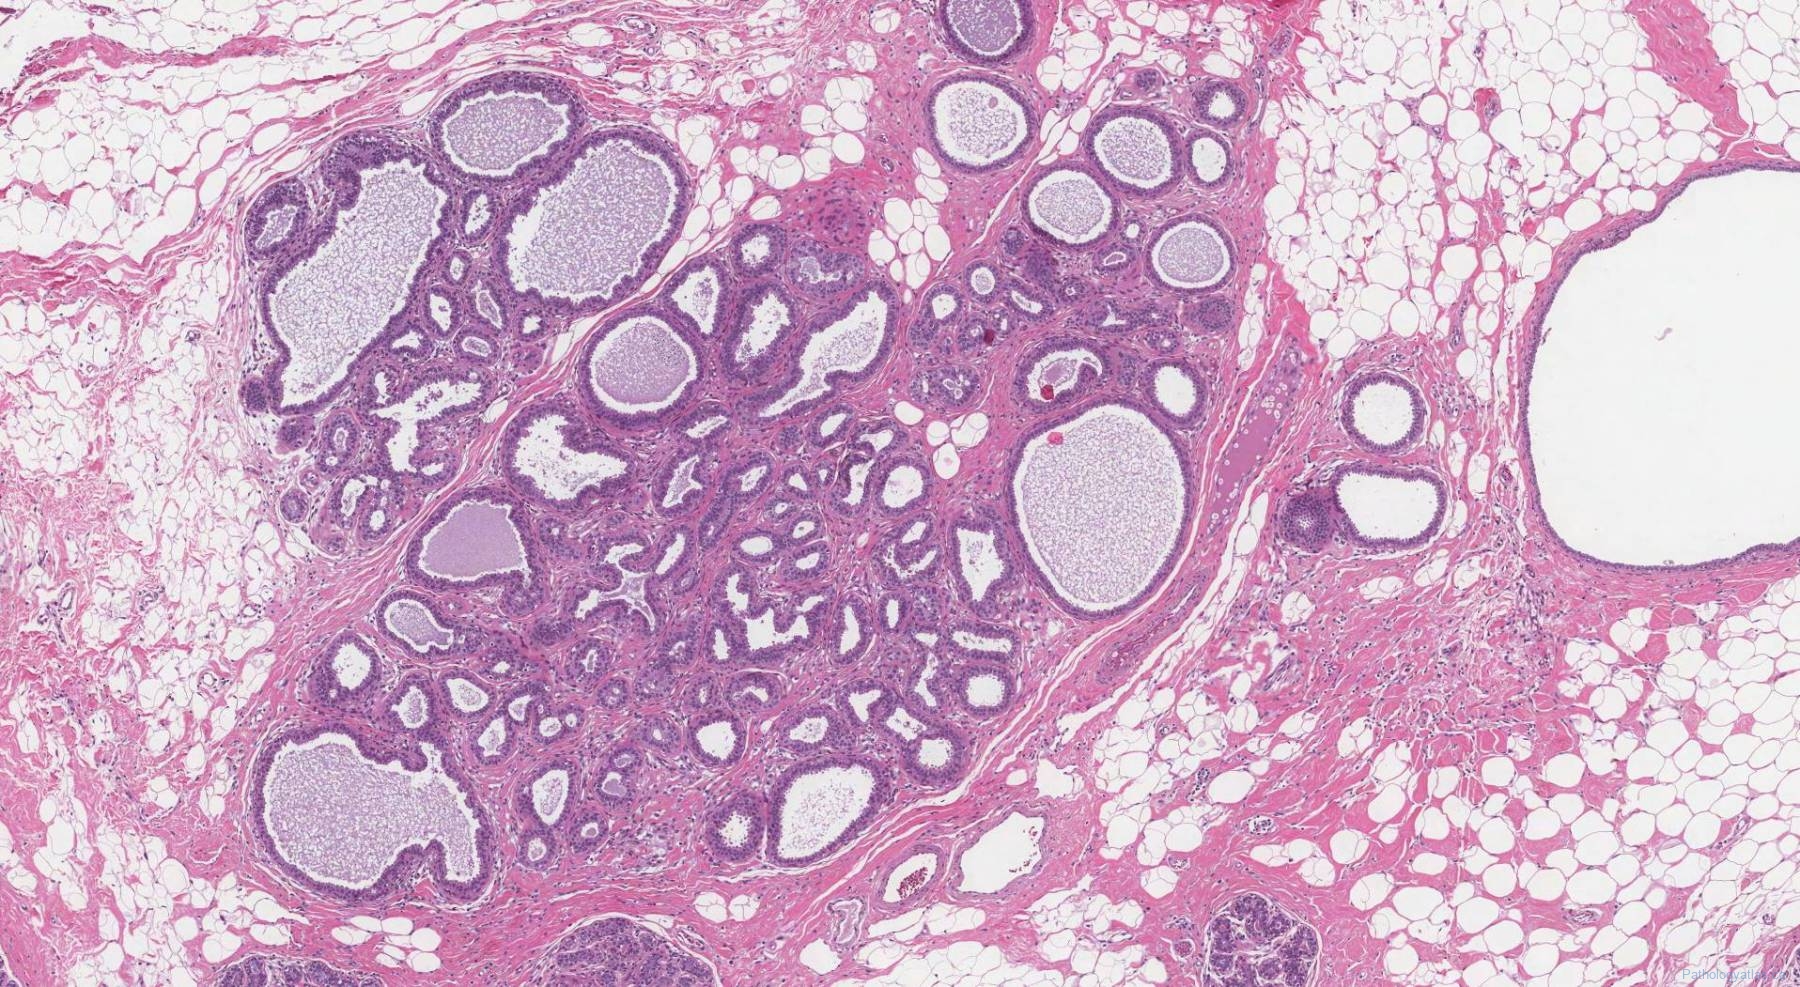 Fibrocystic Disease Of The Breast Atlas Of Pathology